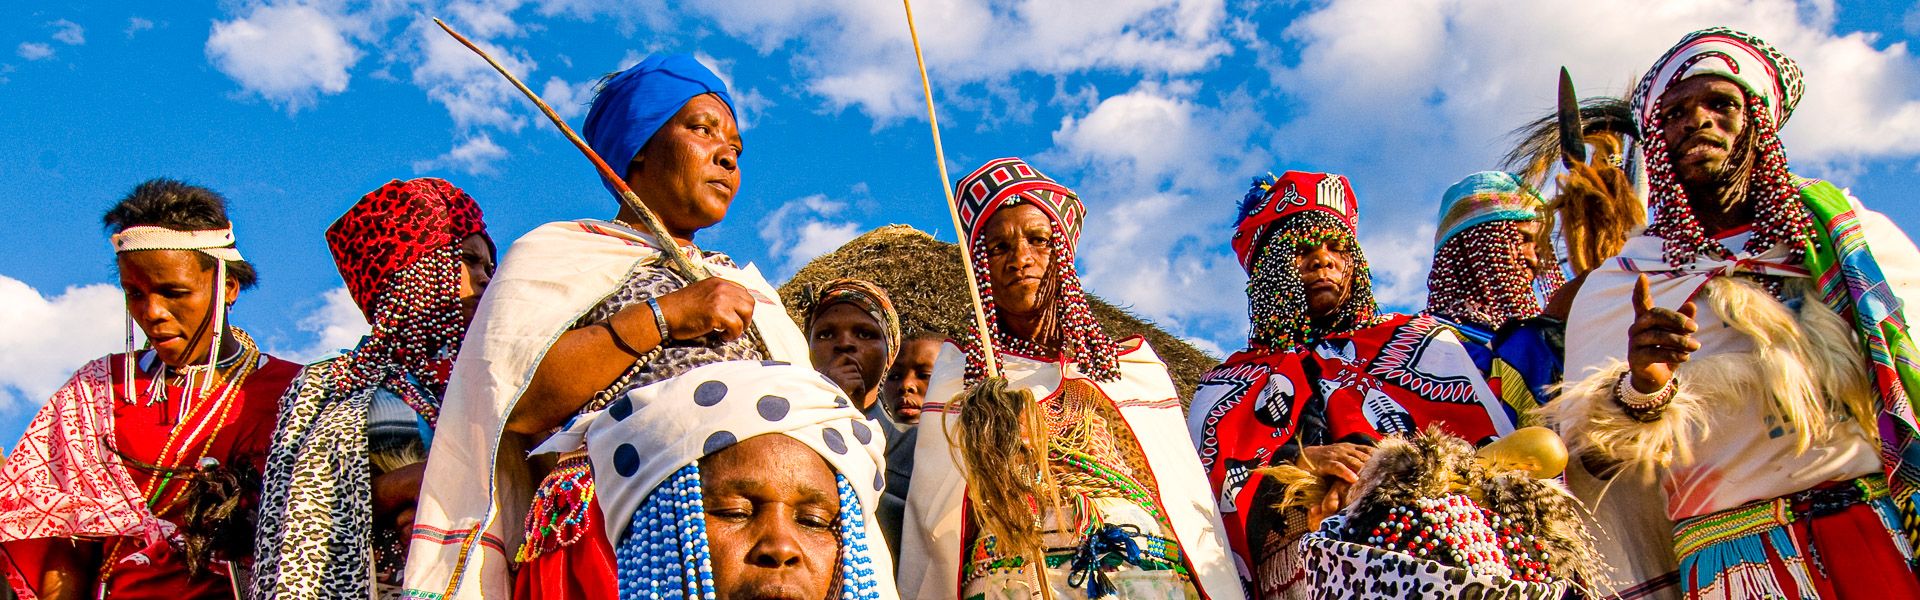 Sangoma-Fest der Xhosa |  Dirk Bleyer / Chamleon